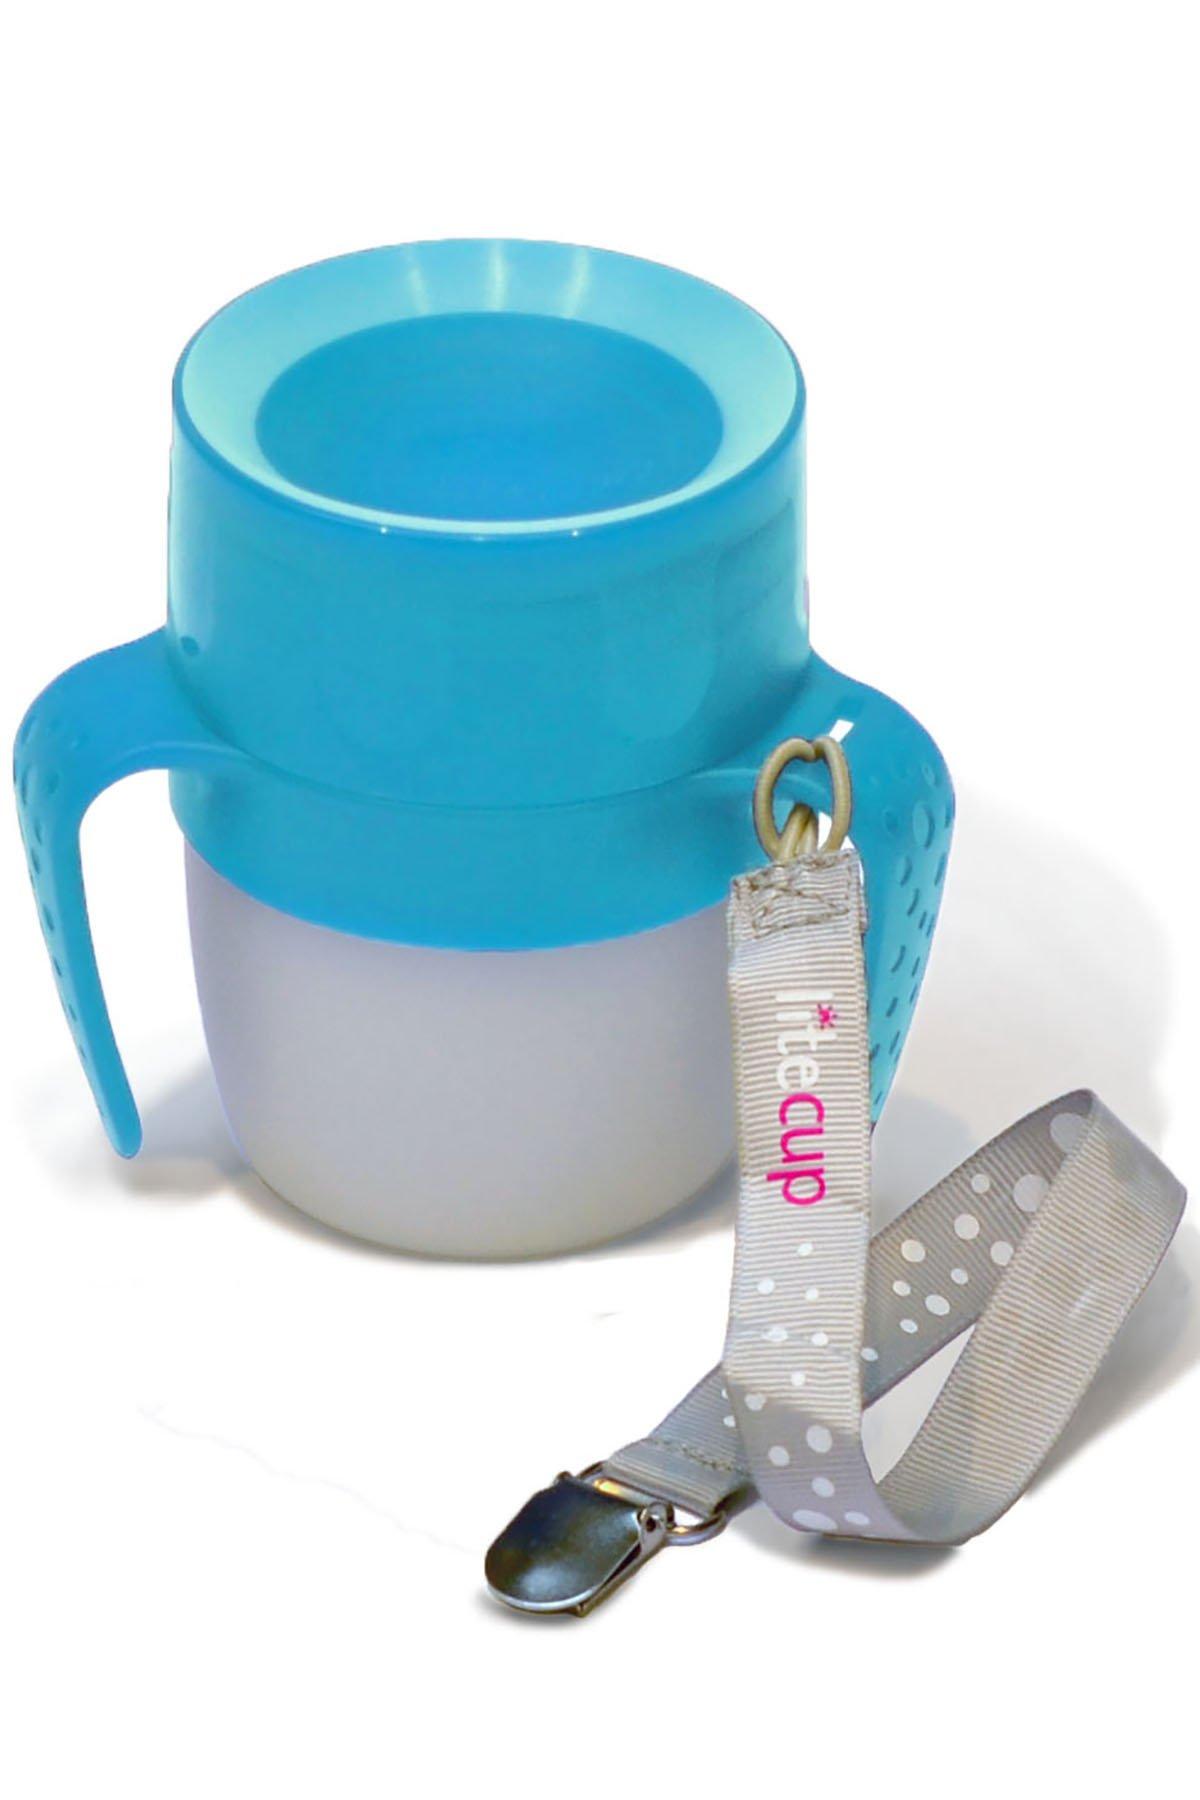 LiteCup Light-Up Baby Cup – Blue